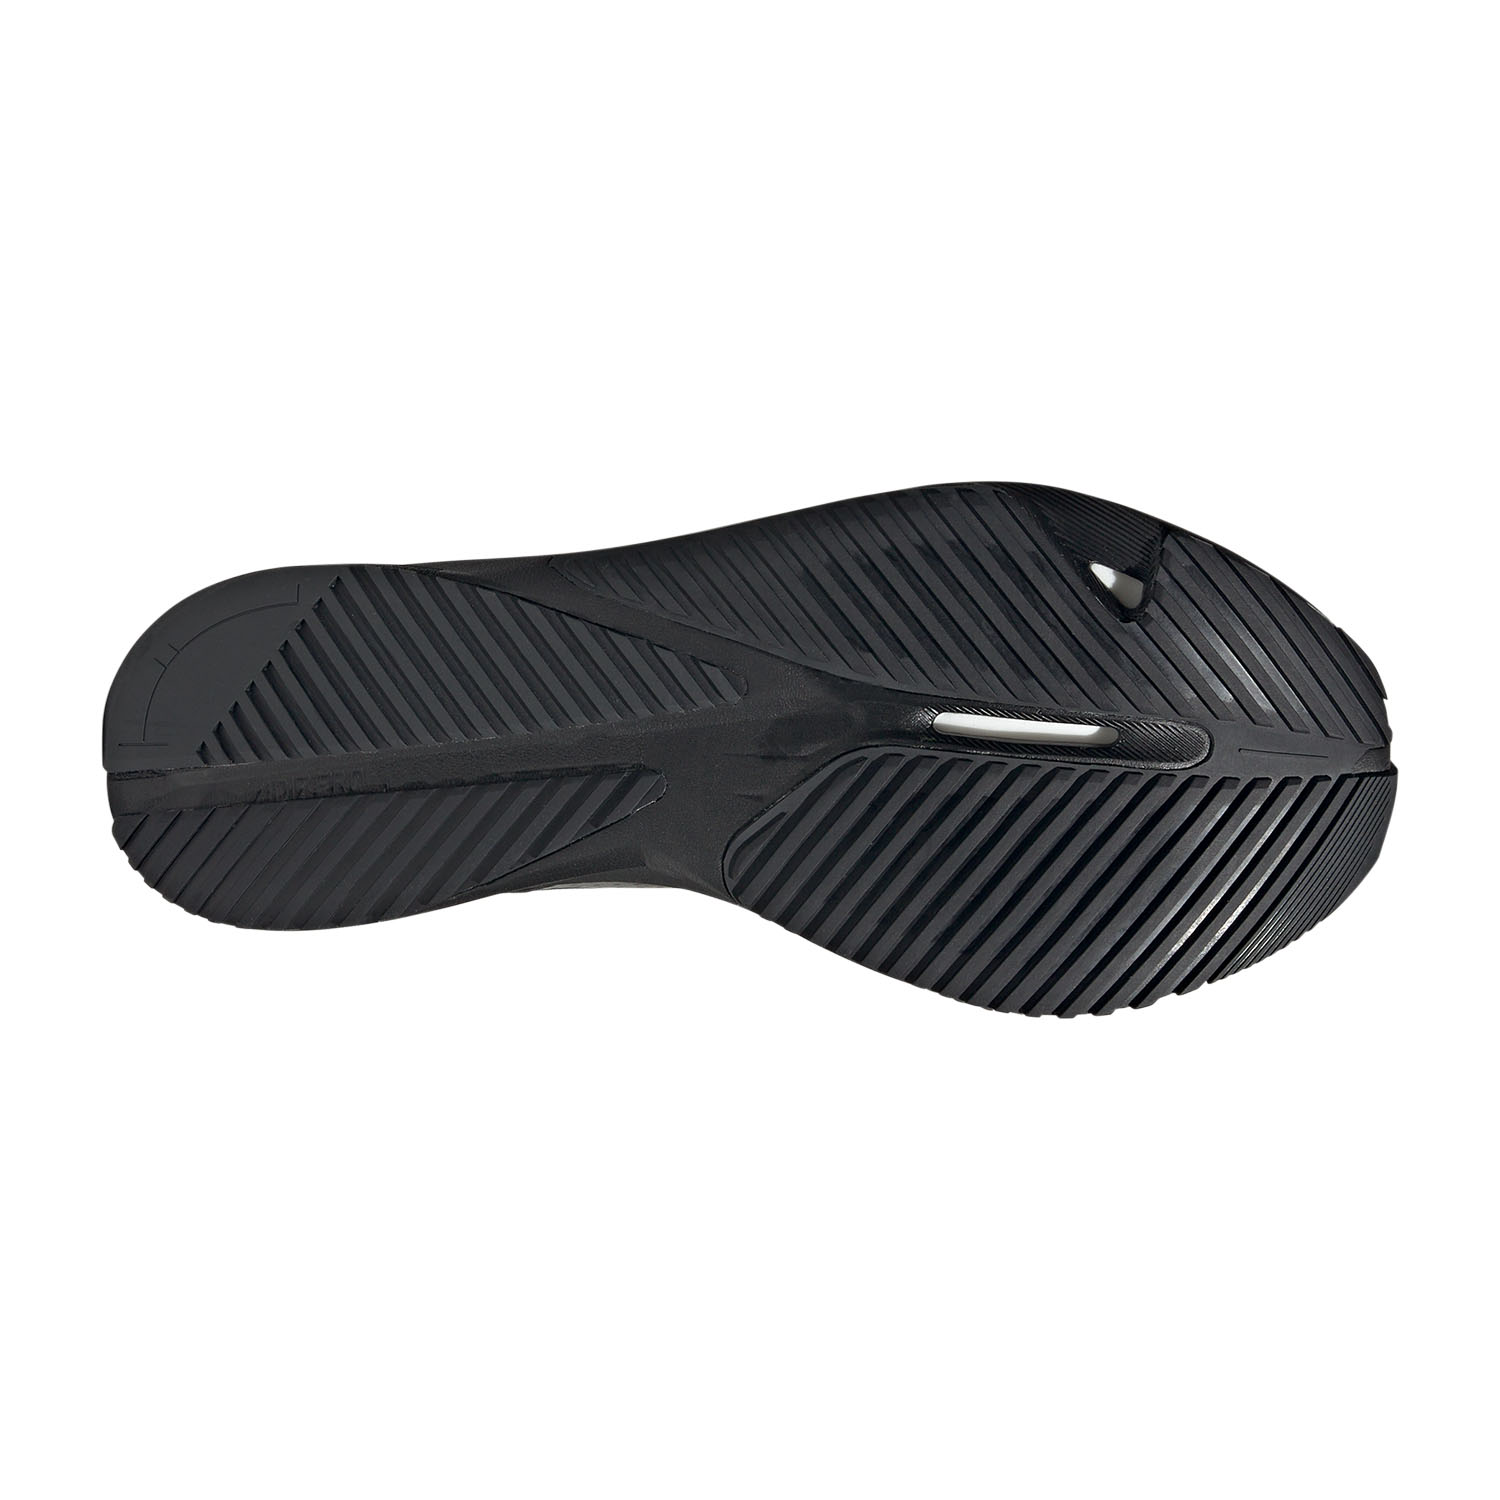 adidas adizero SL Men's Running Shoes - Core Black/Carbon